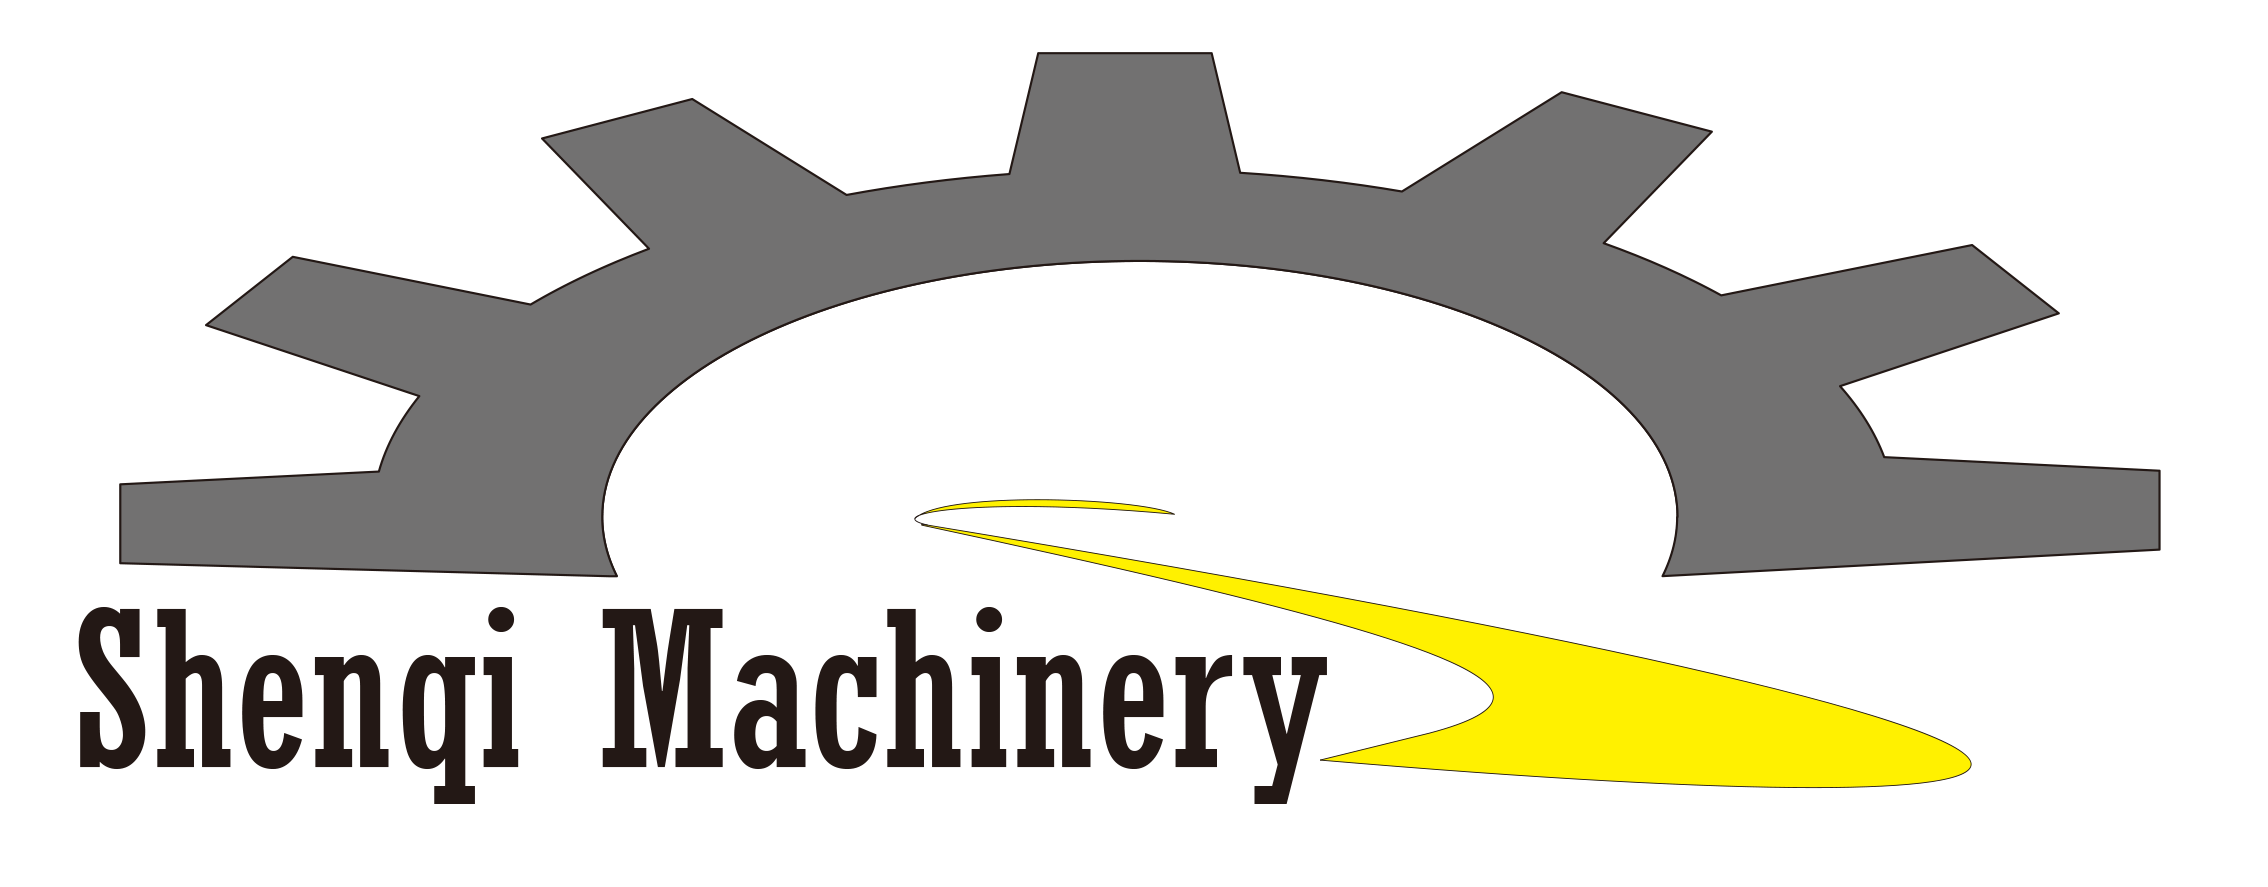 Shanghai Shenqi Machinery Equipment Co.,Ltd